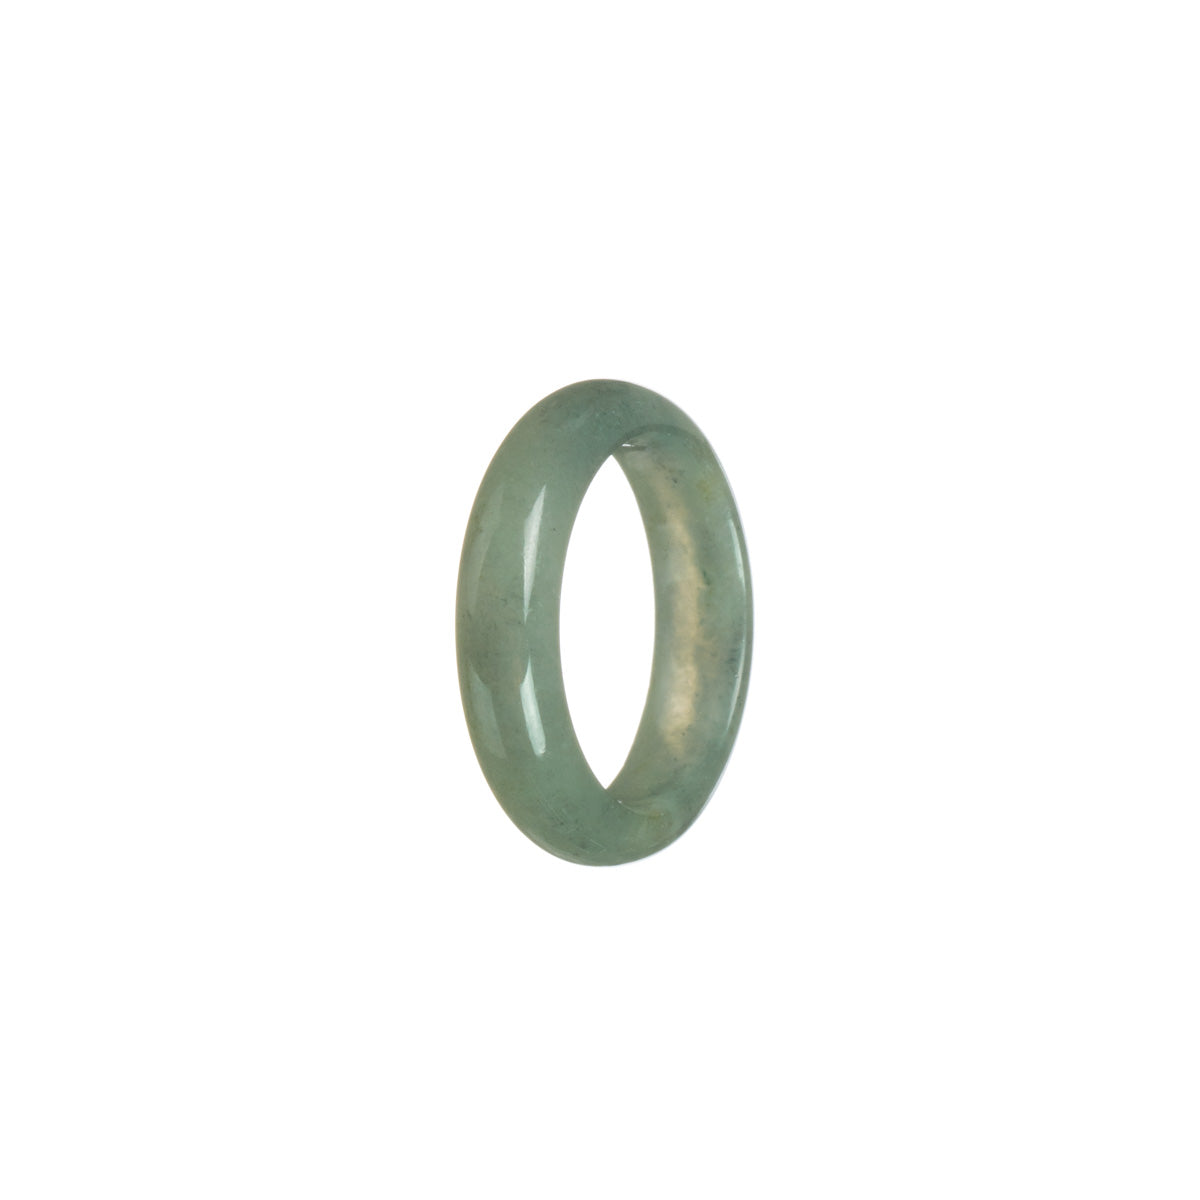 Authentic Greyish Olive Green Jadeite Jade Band - Size S 1/2